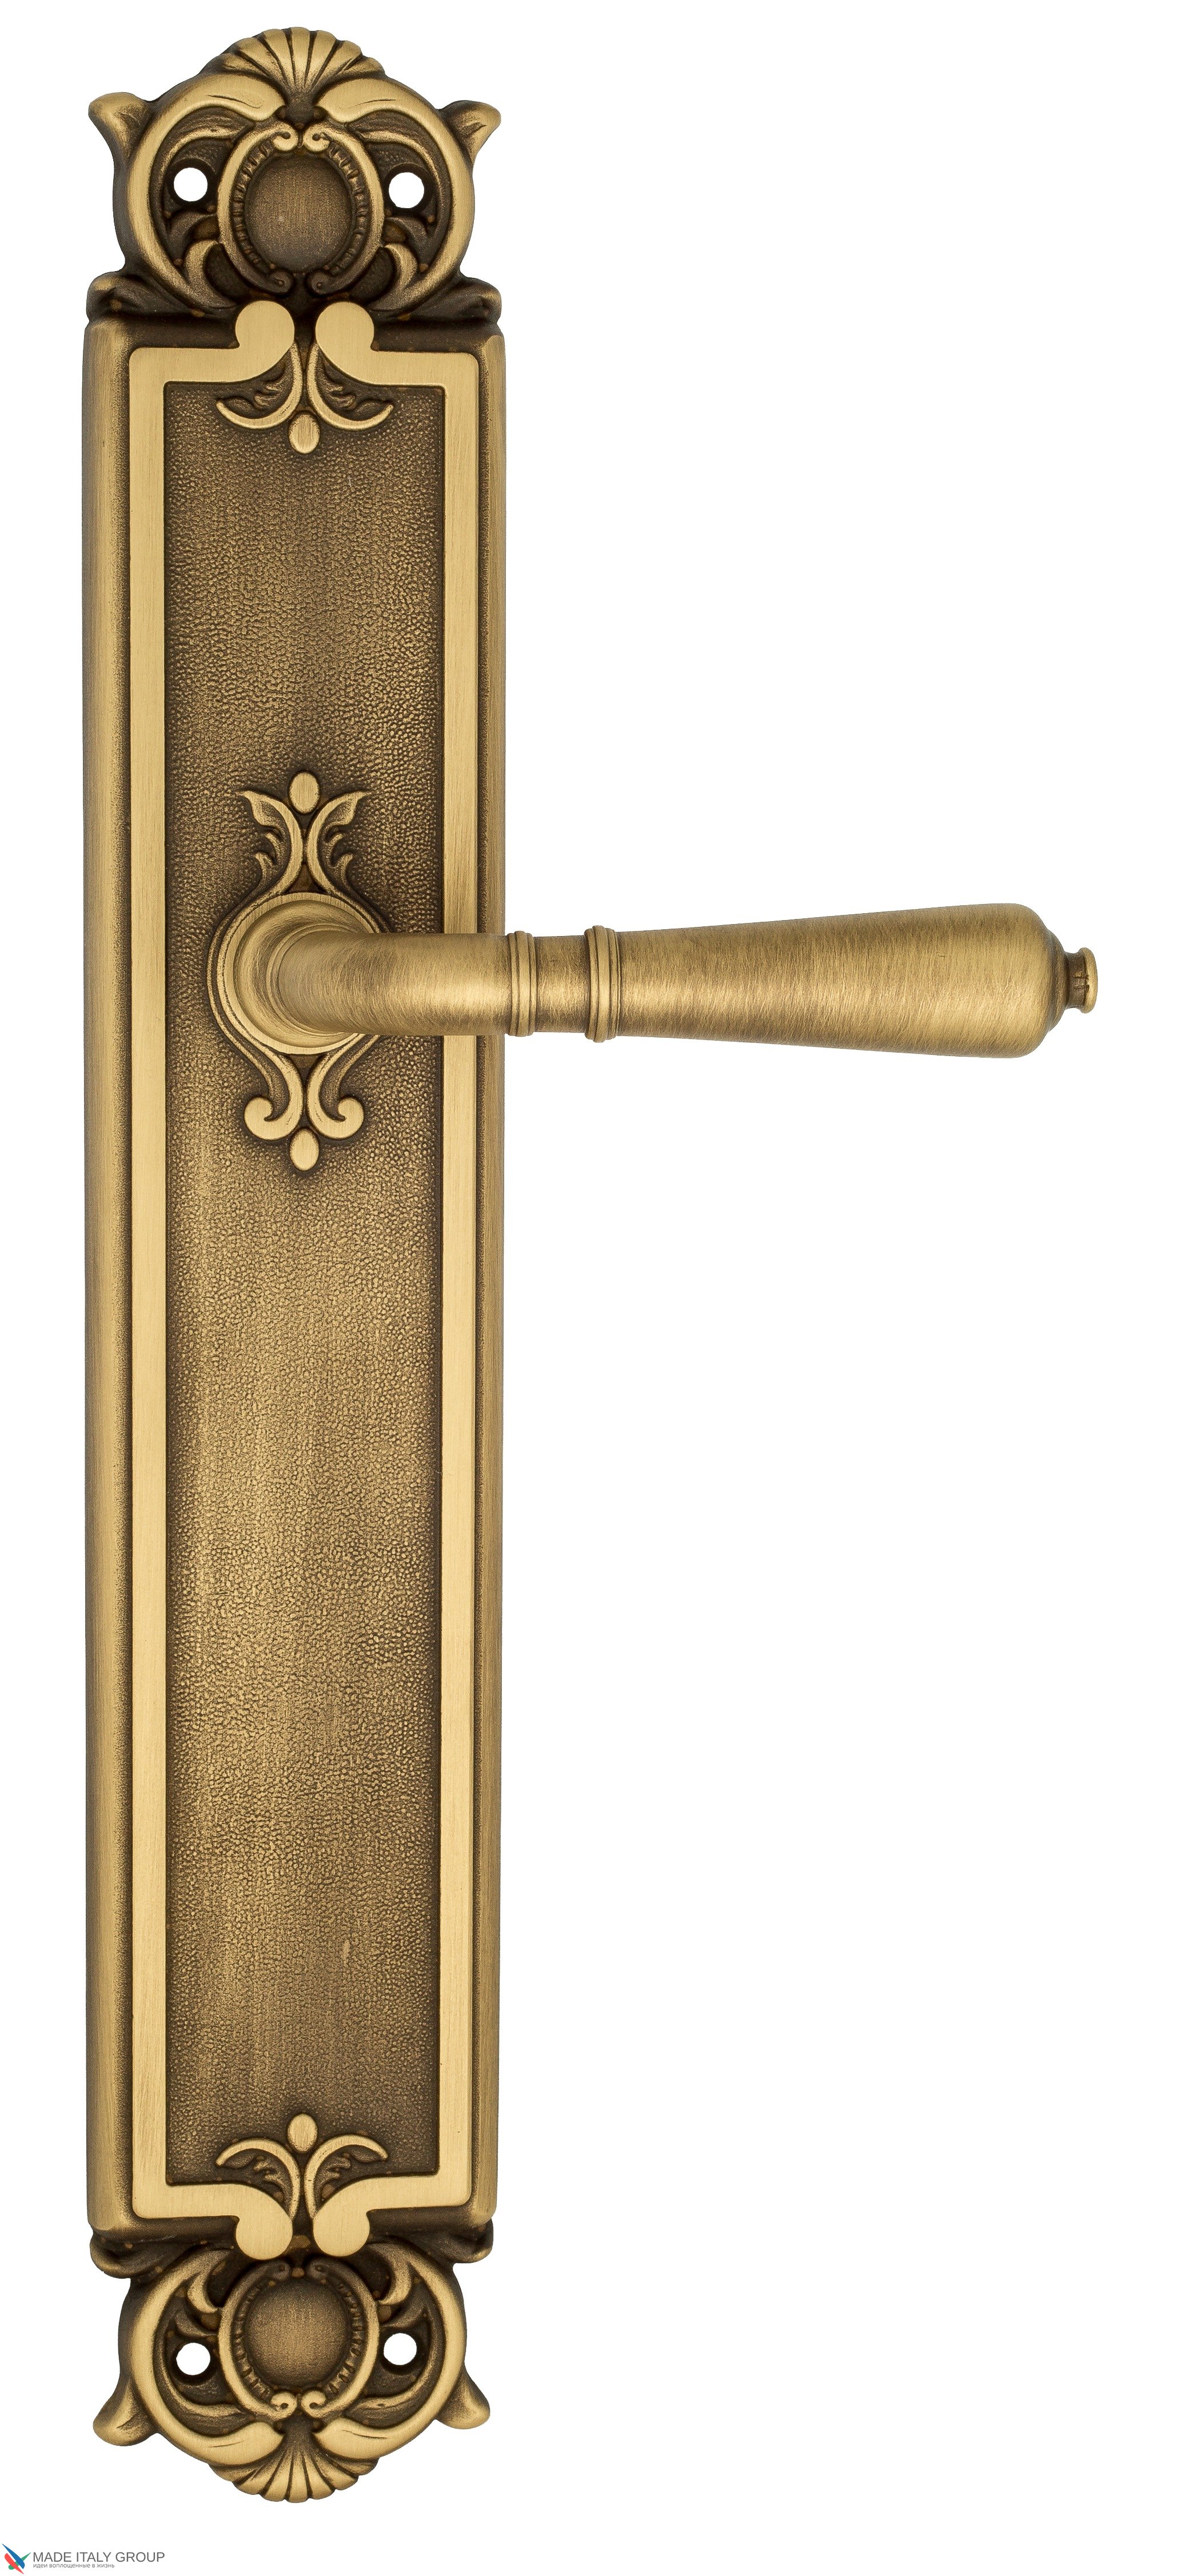 Дверная ручка Venezia "VIGNOLE" на планке PL97 матовая бронза